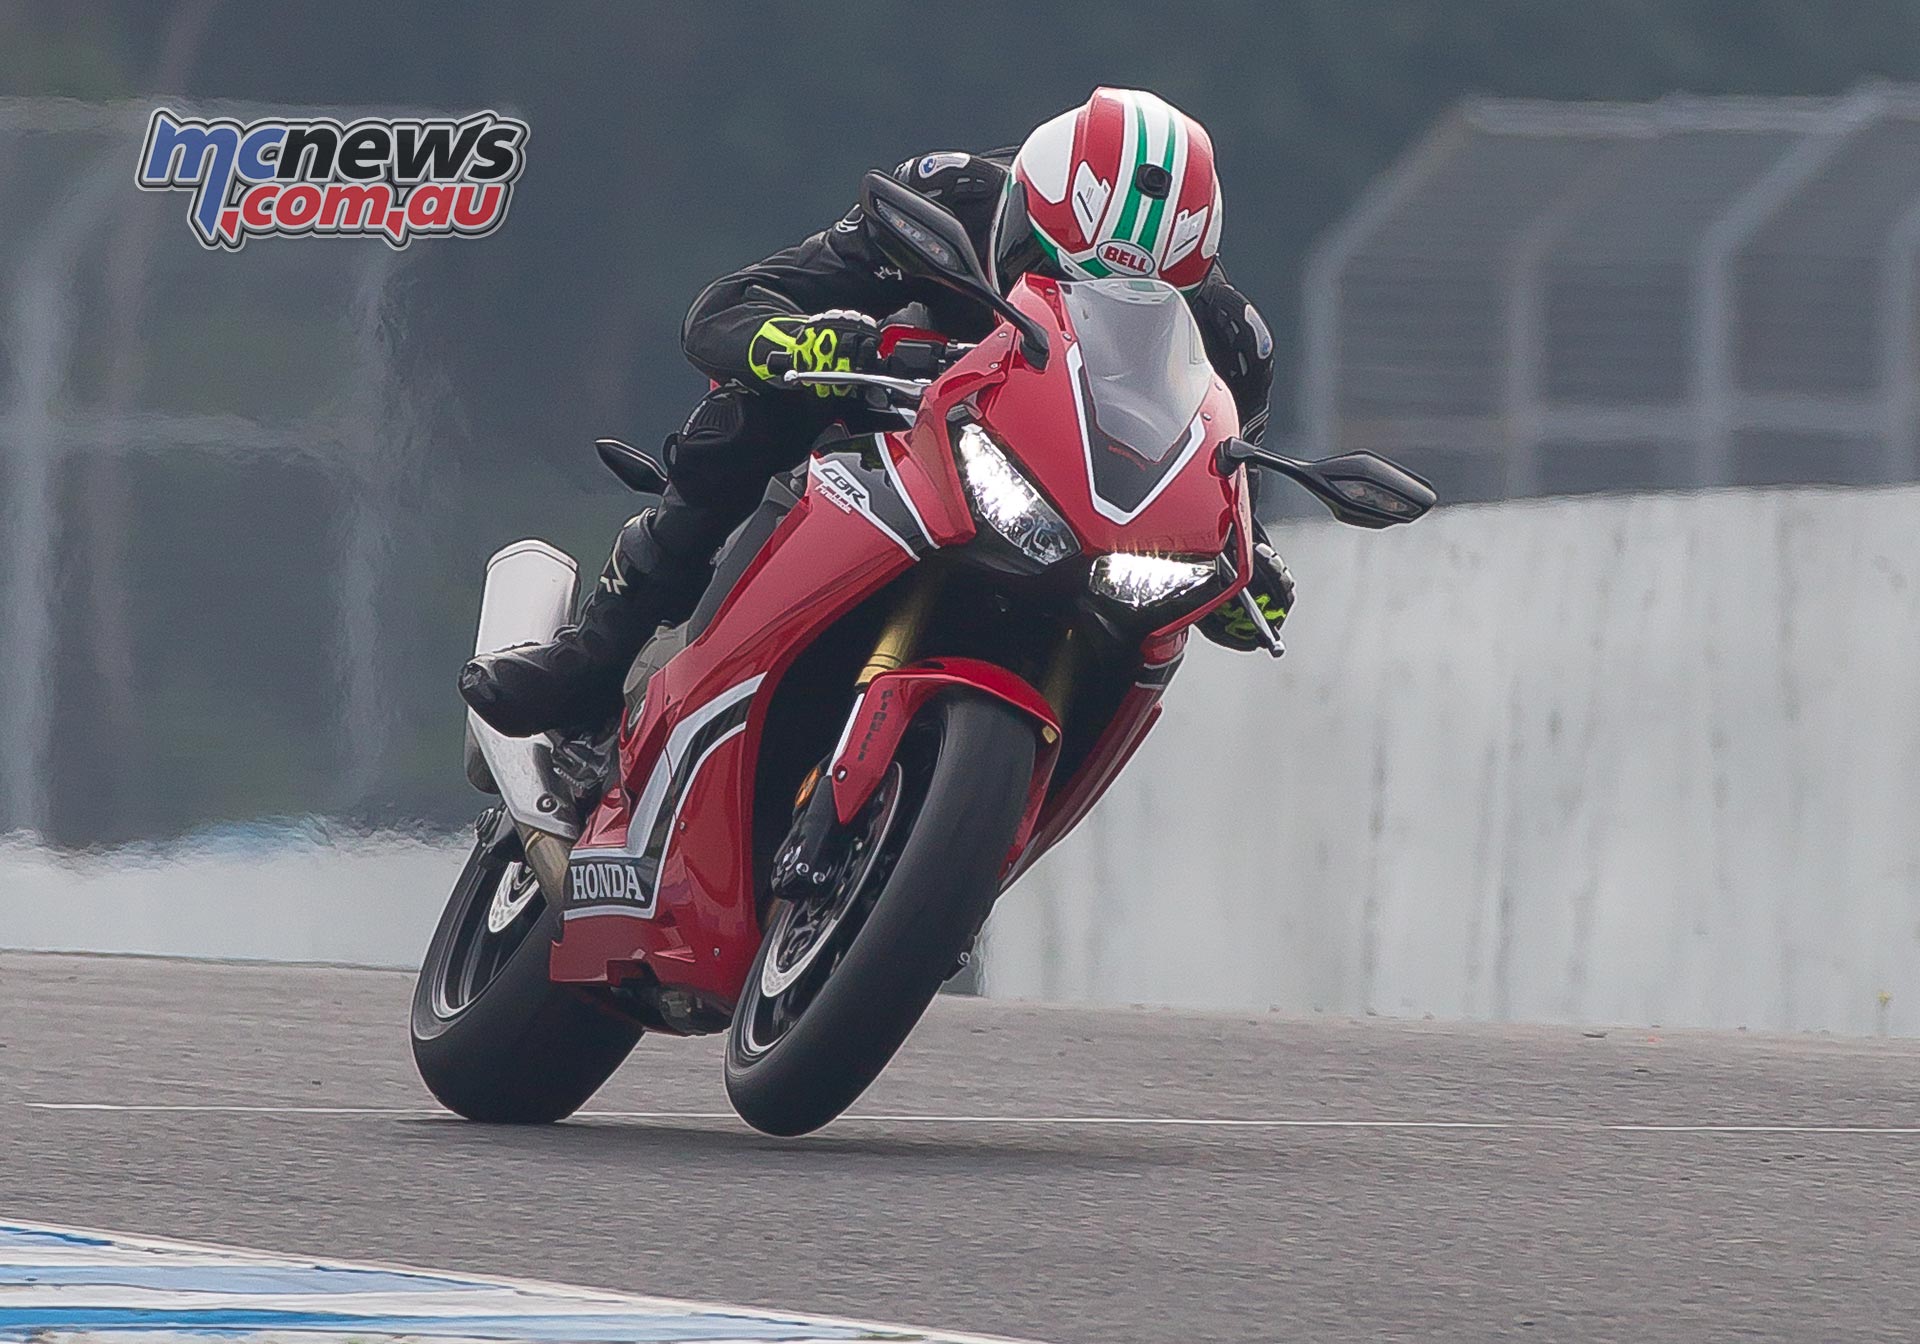 17 Honda Cbr1000rr Fireblade Review Motorcycle News Sport And Reviews